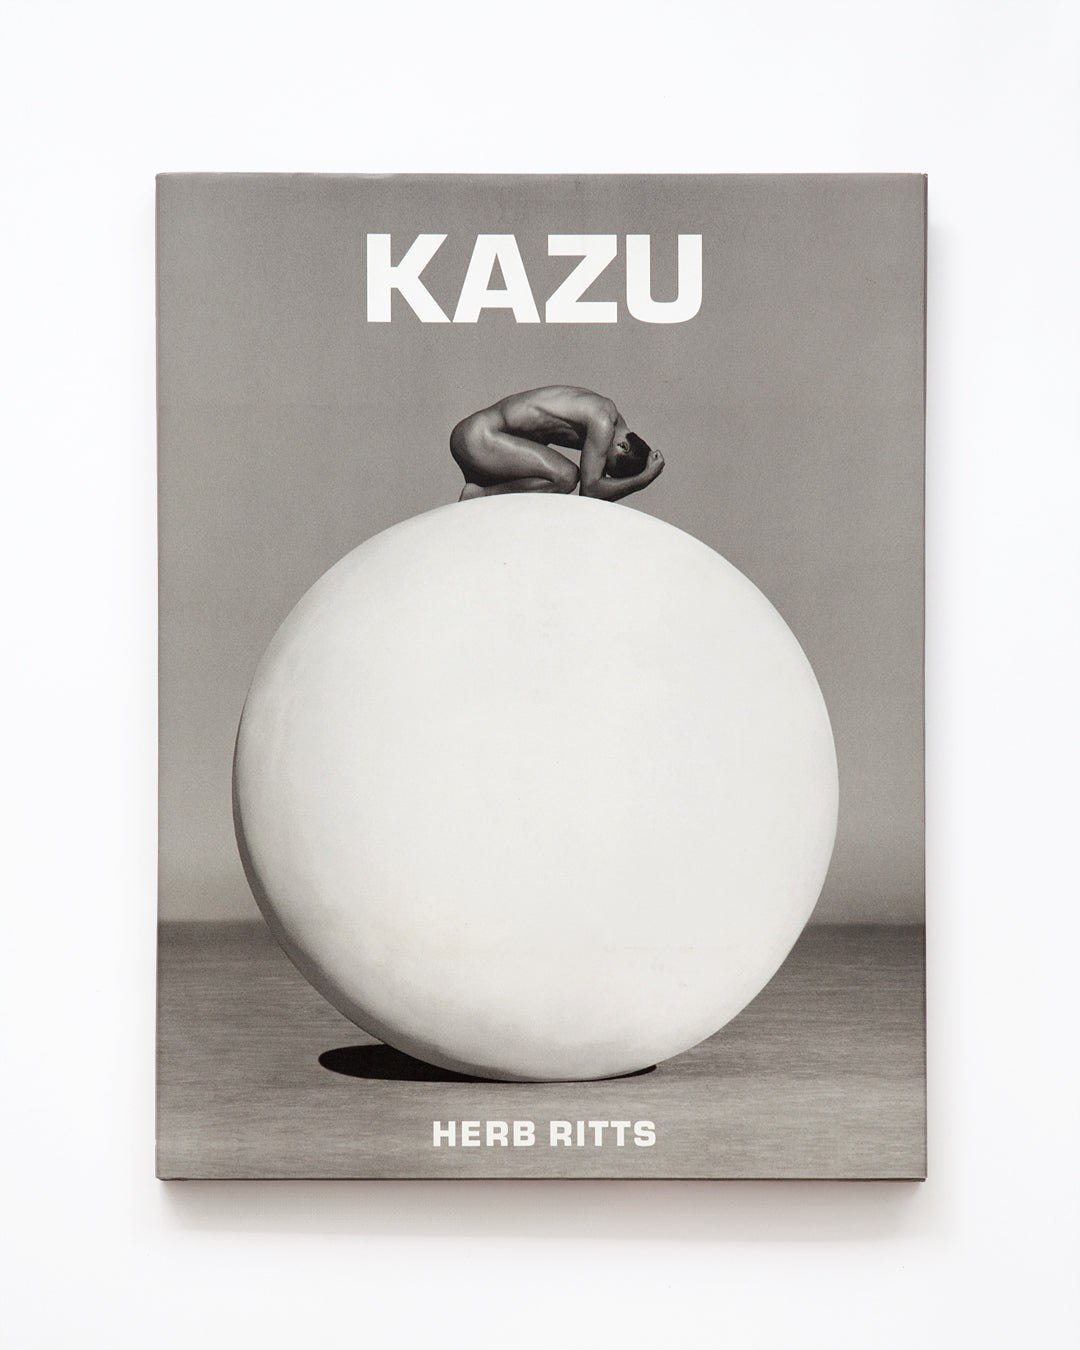 Herb Ritts - Kazu